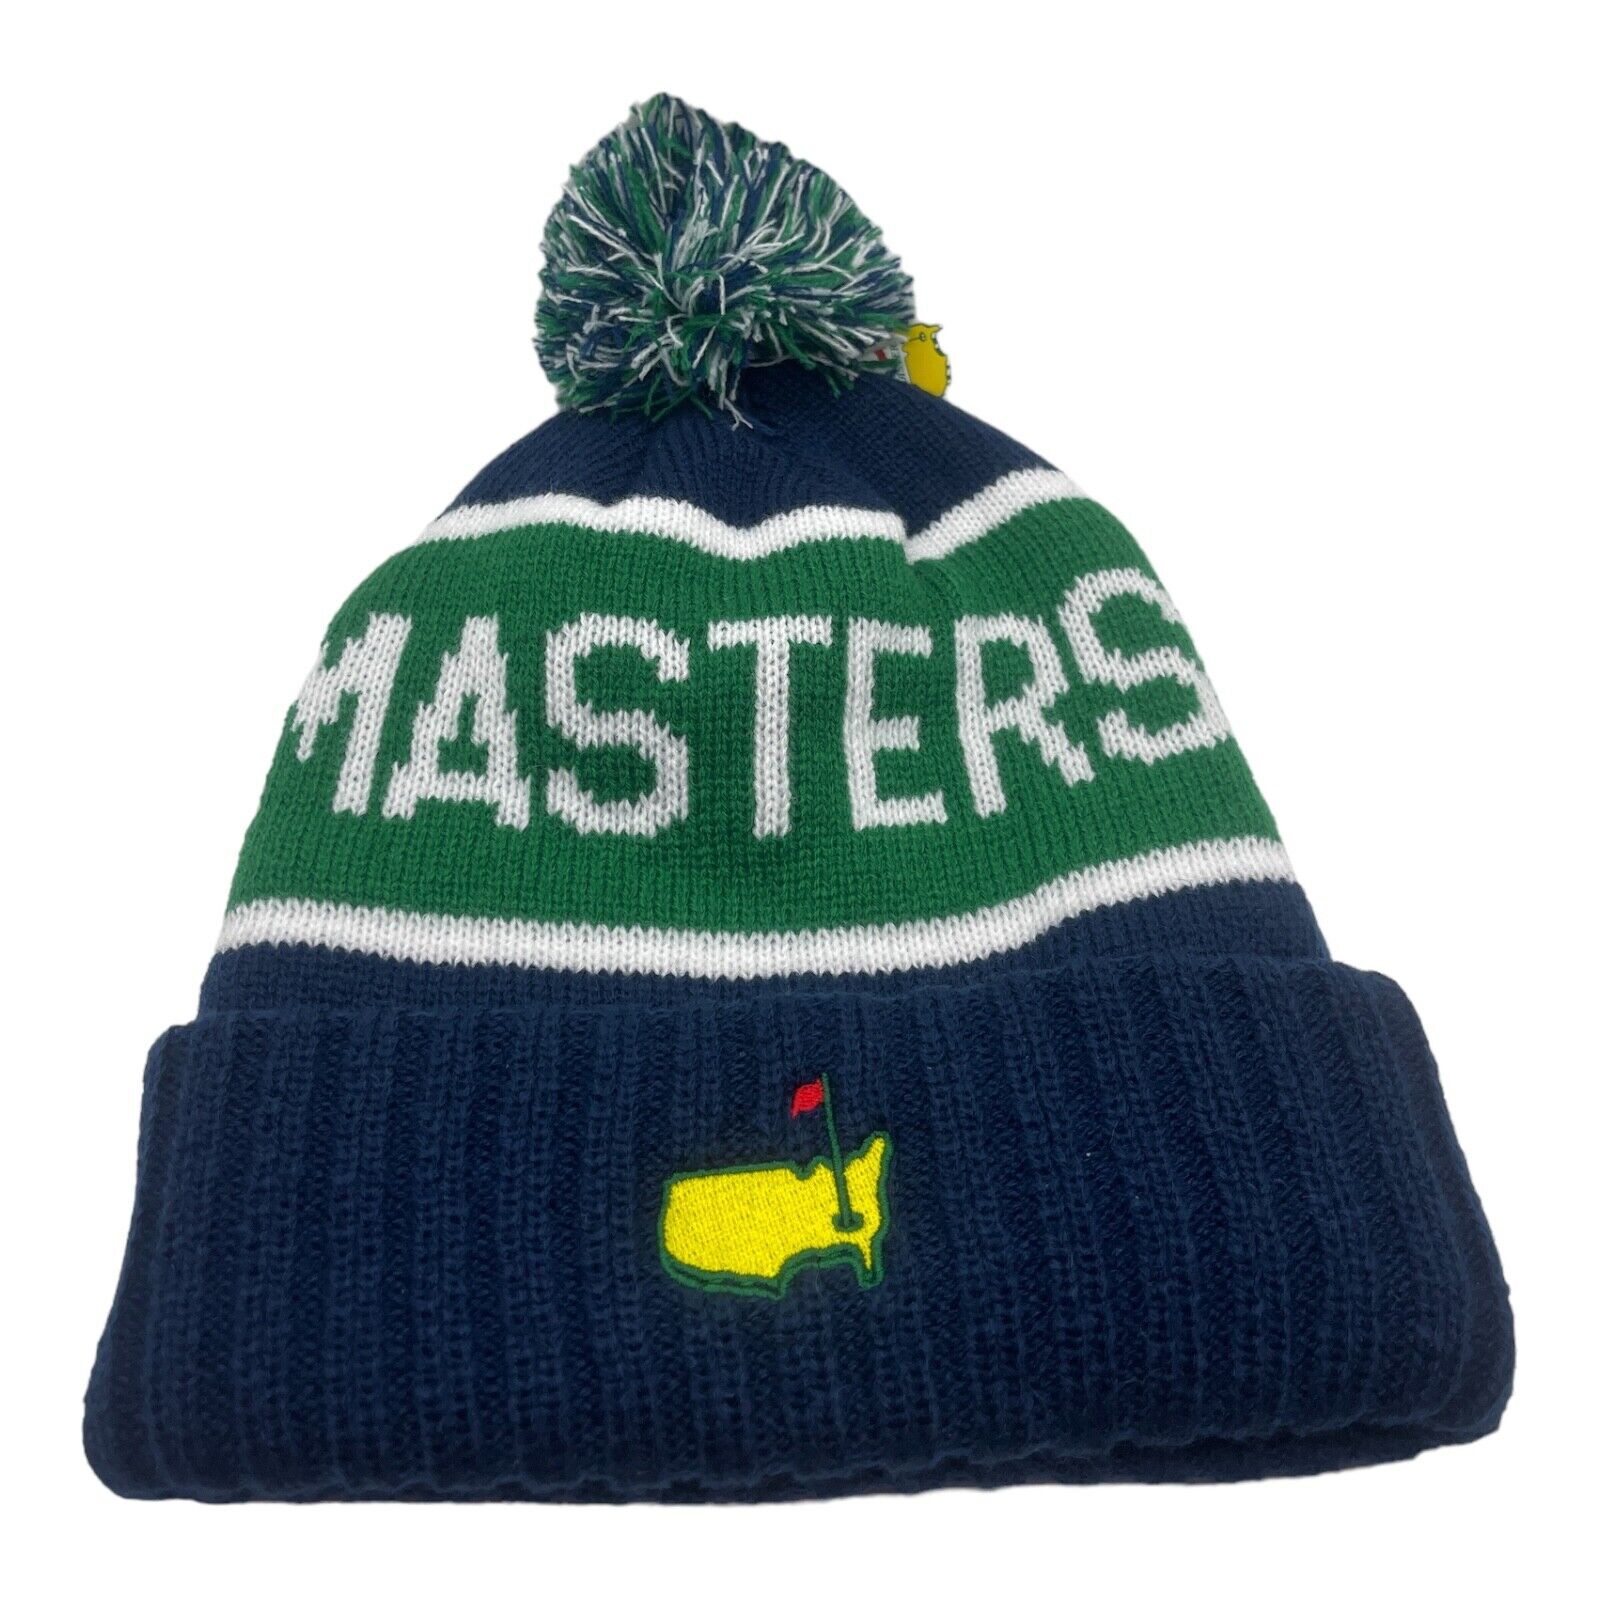 New Masters Navy Toboggan Ski Hat with Pom Cold Weather Knit Hat Beanie Augusta